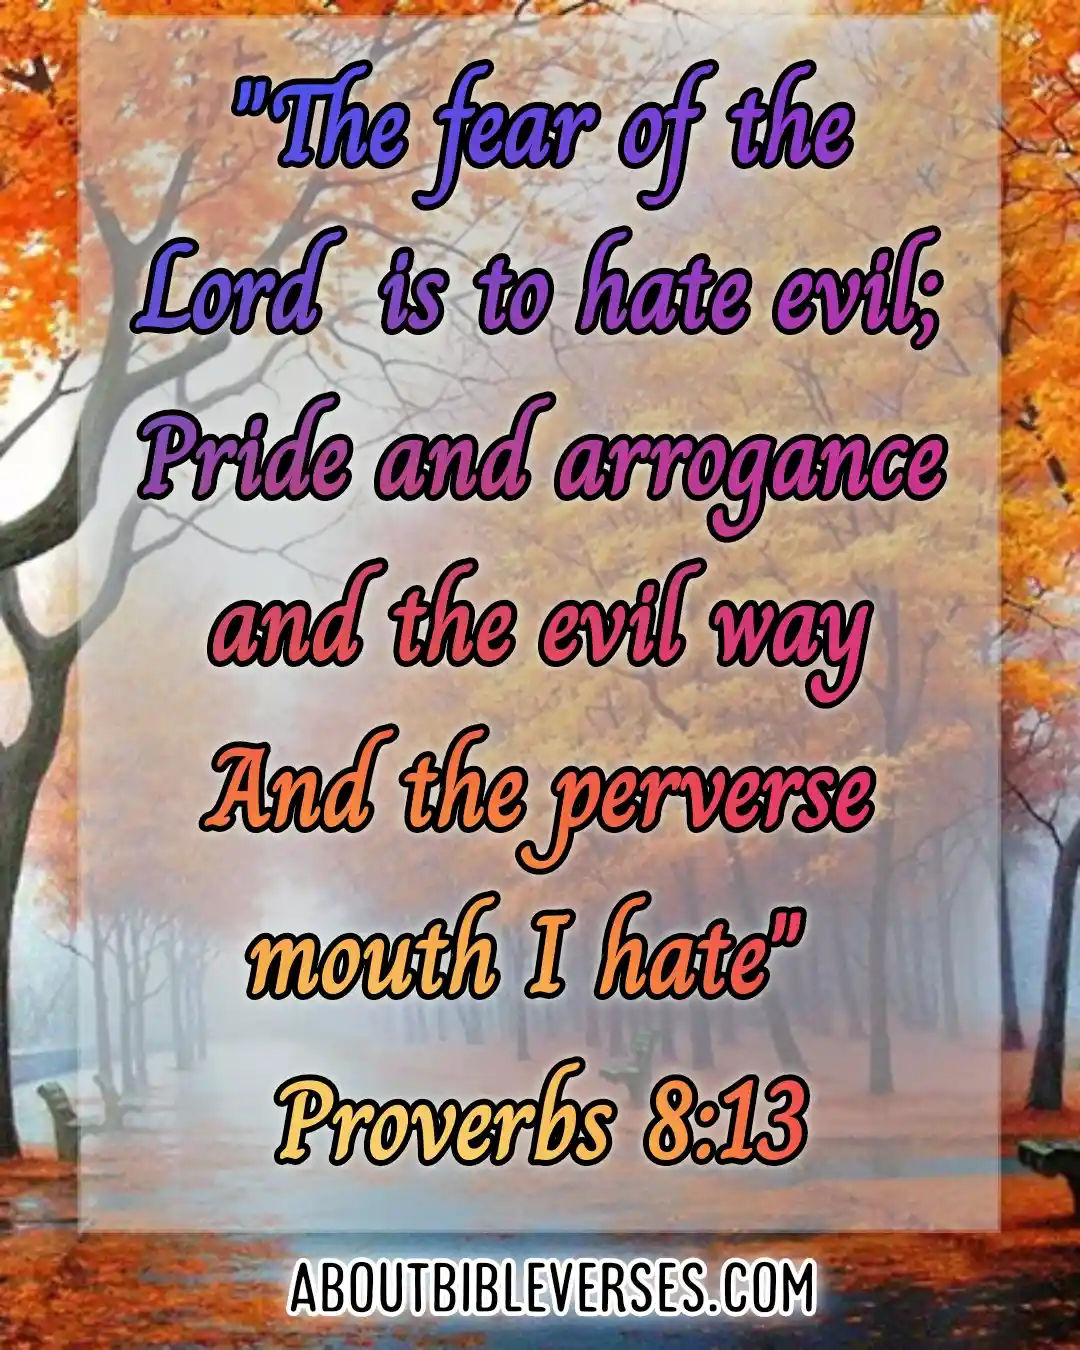 Today Bible Verse (proverbs 8:13)